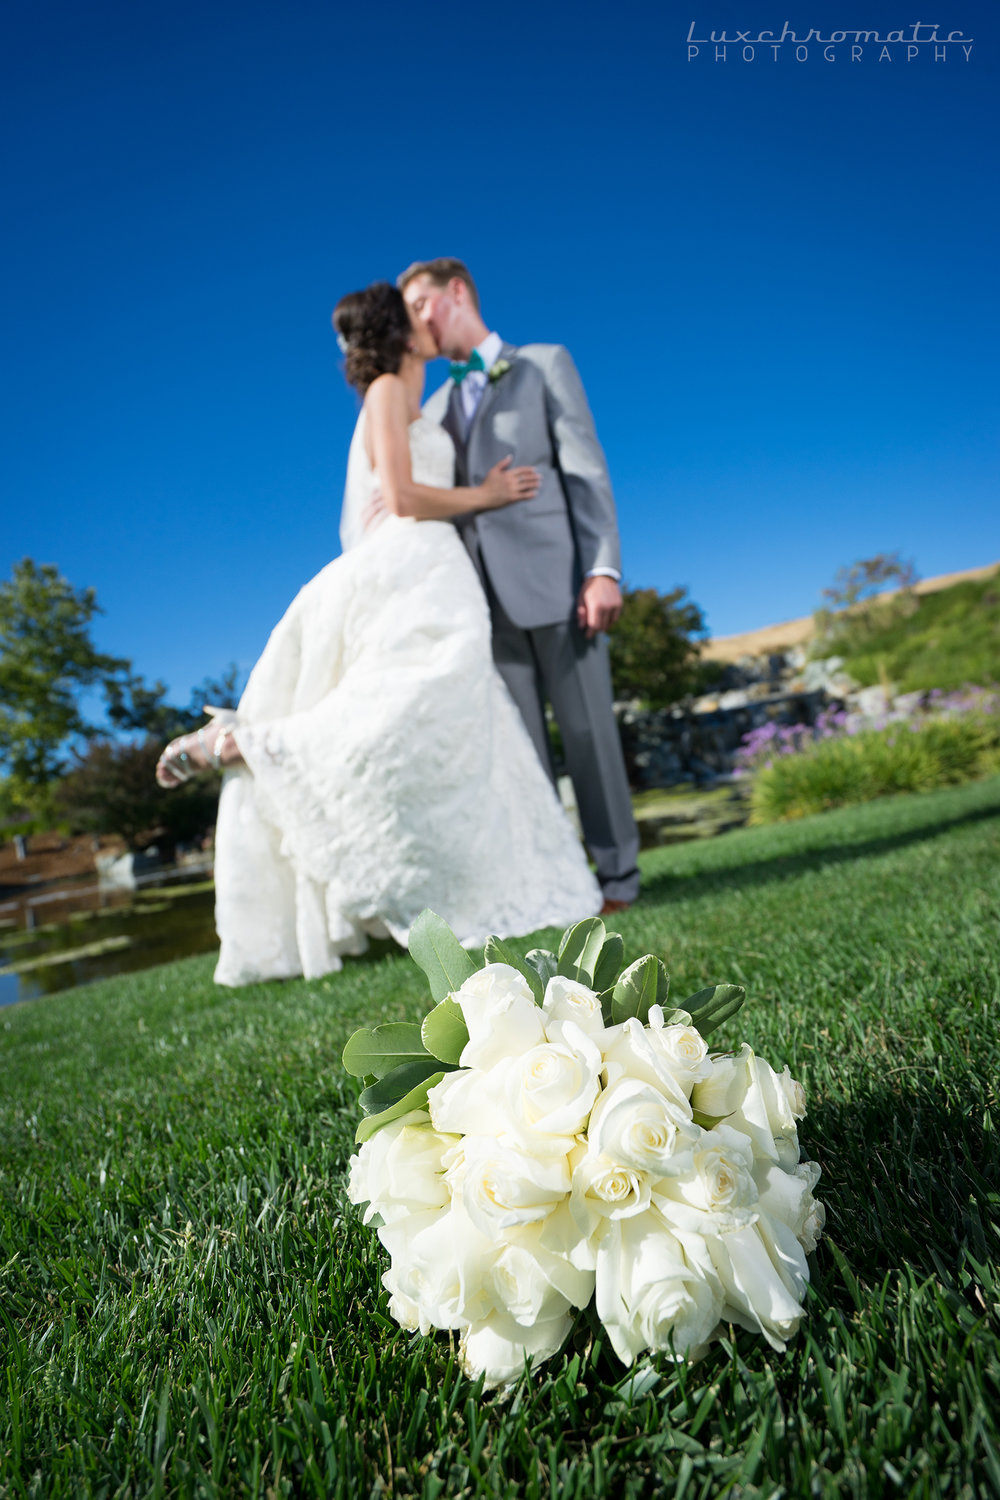 061717_Jessica_Chris-2789-luxchromatic-wedding-bride-groom-brides-sonyalpha-sonyimages-sony-sonyphotography-sanfrancisco-sf-bayarea-weddingphotography-photographer-profoto-interfit-strobe-light-speedlite-dublin-ranch-golf-course-ca-california.jpg